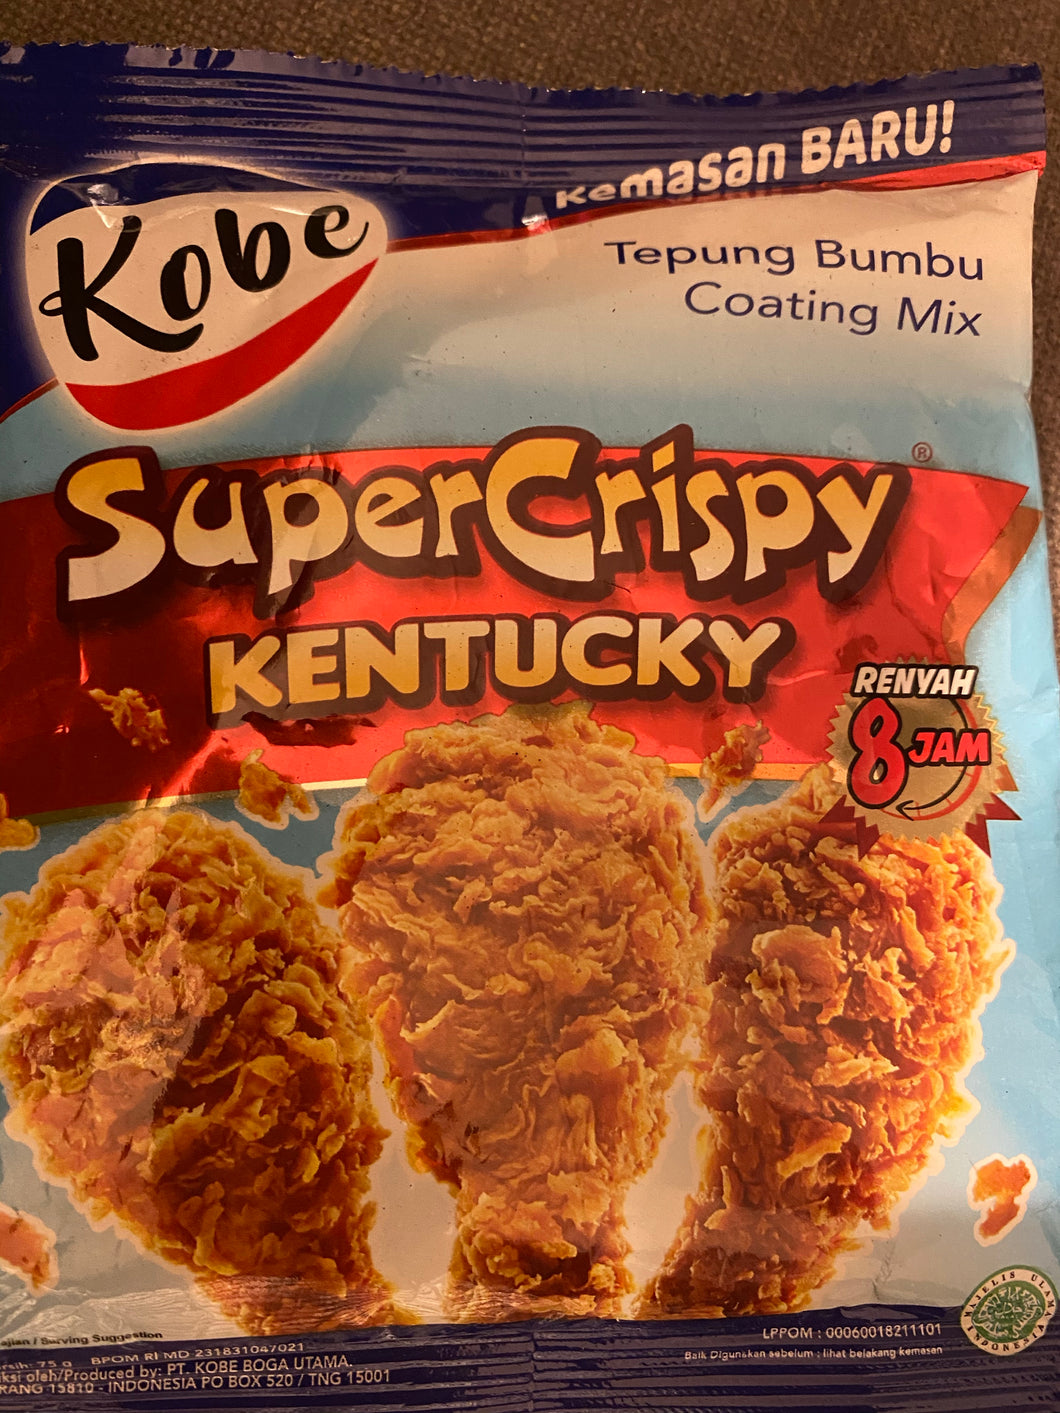 Super Crispy Kentucky kobe 210 gr